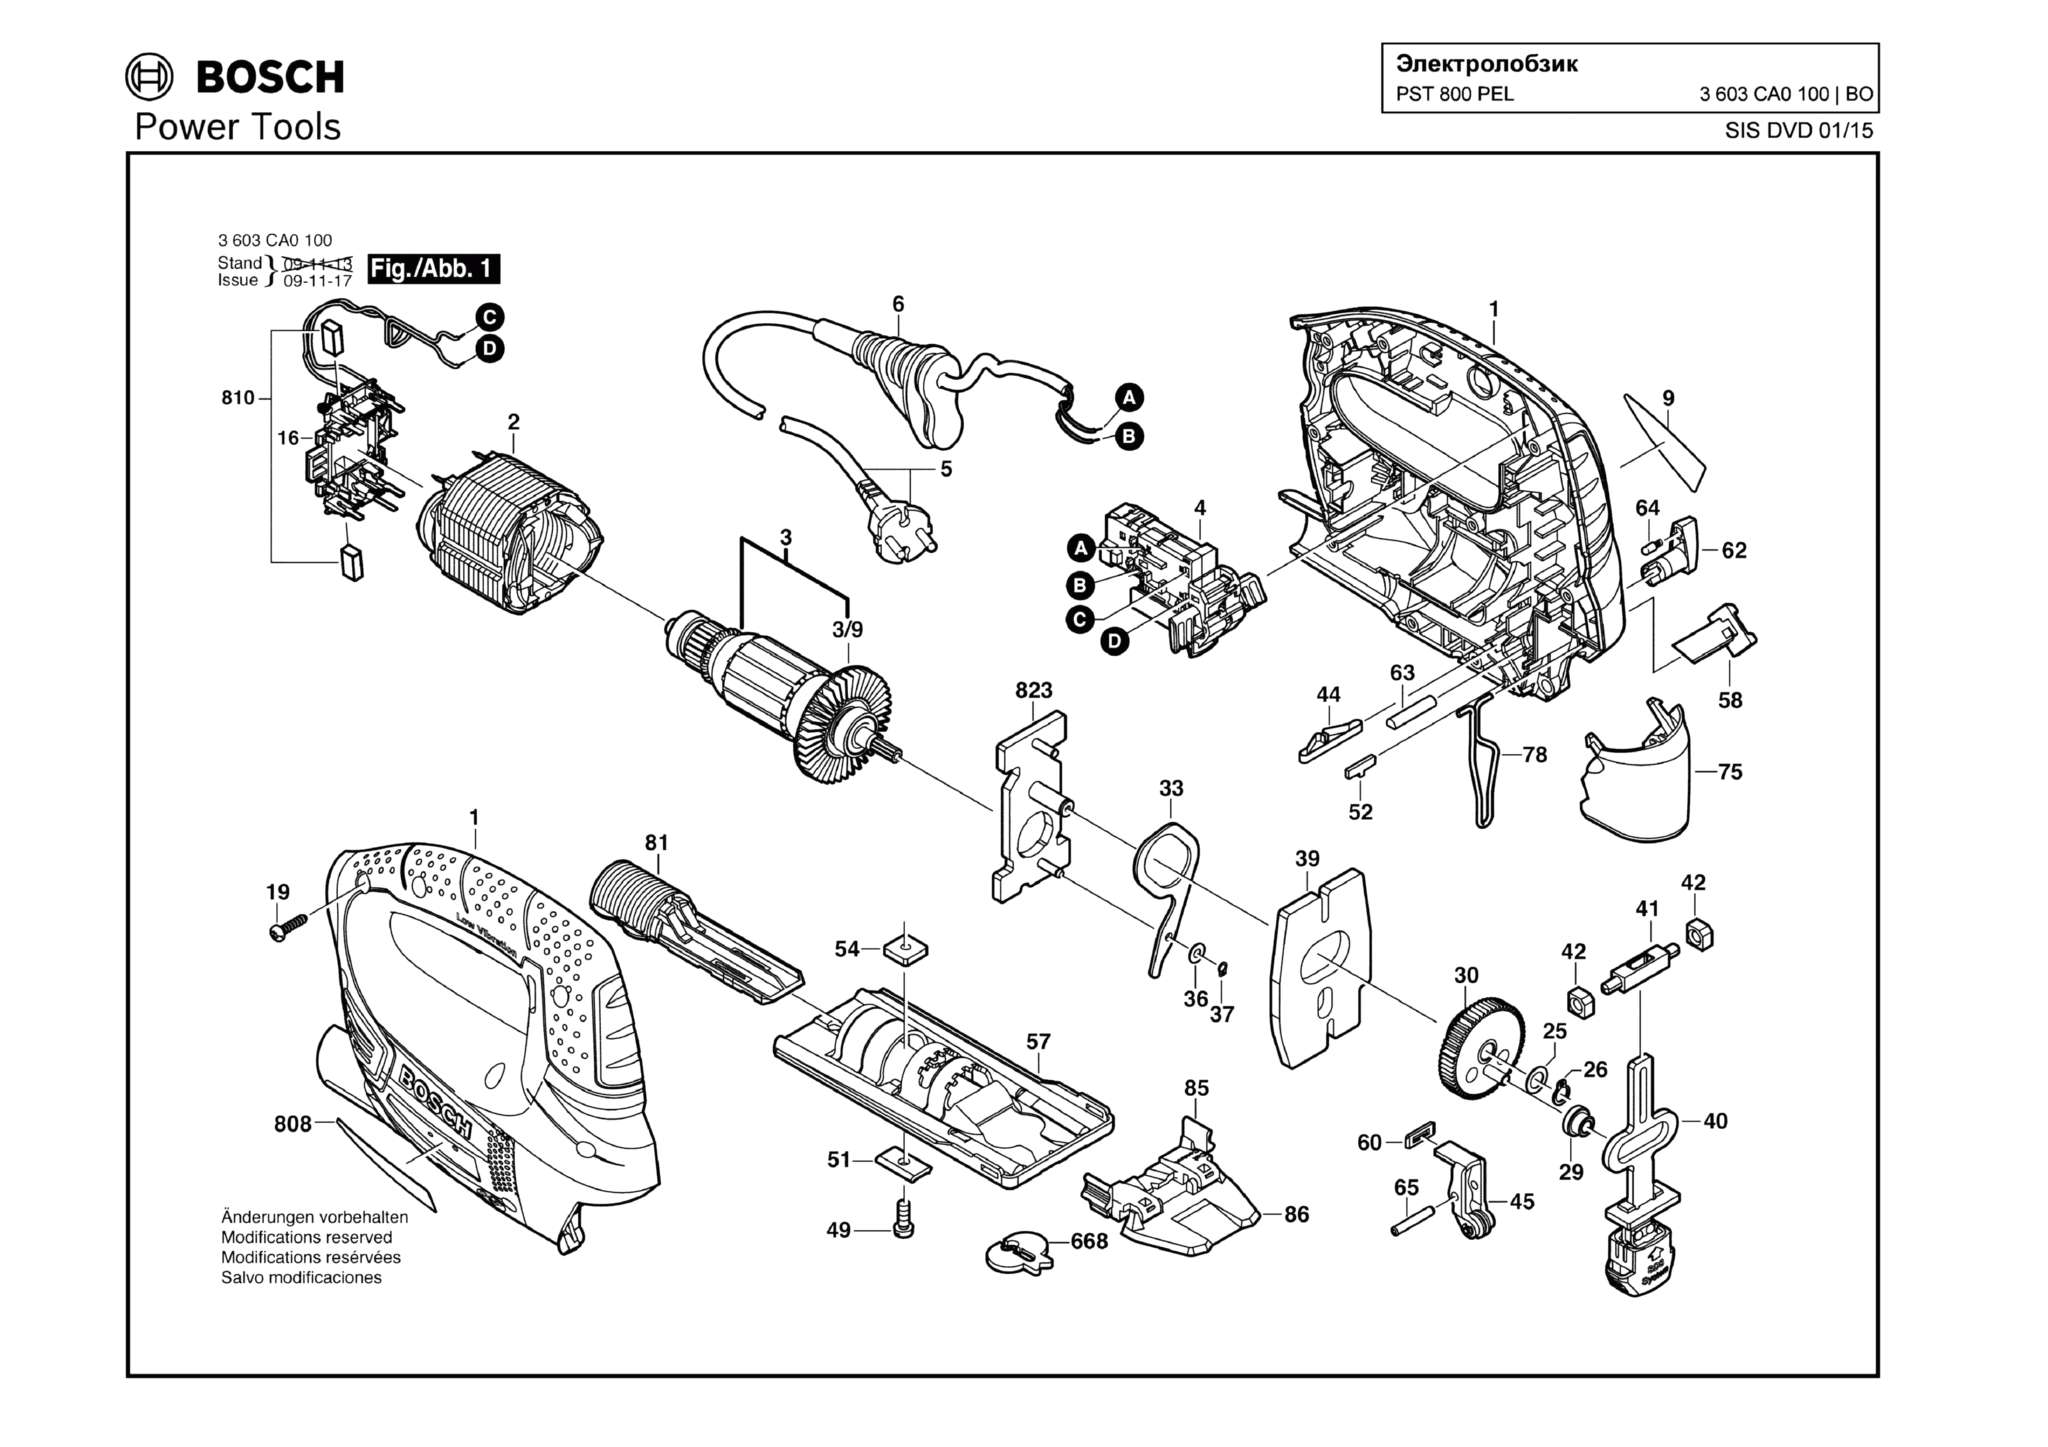 Запчасти, схема и деталировка Bosch PST 800 PEL (ТИП 3603CA0100)